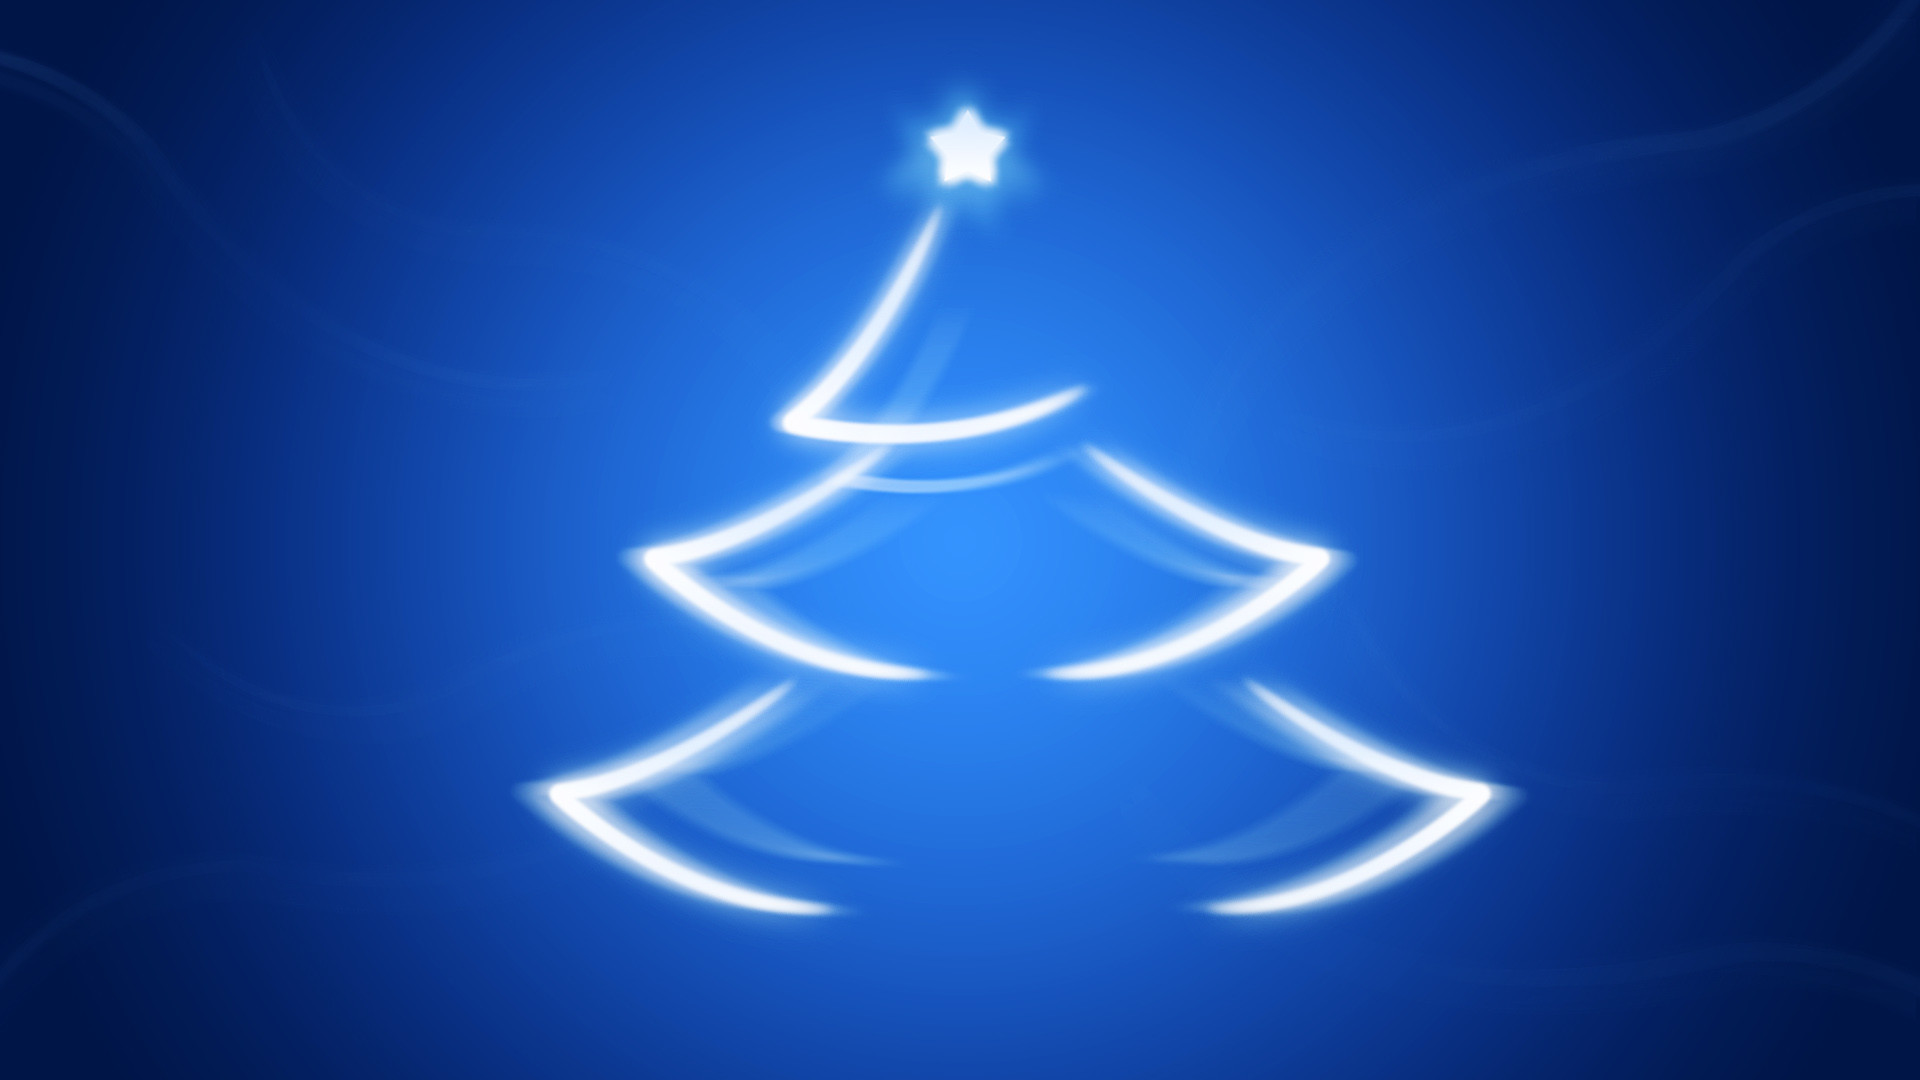 1920x1080 Christmas tree wallpaper HD free download